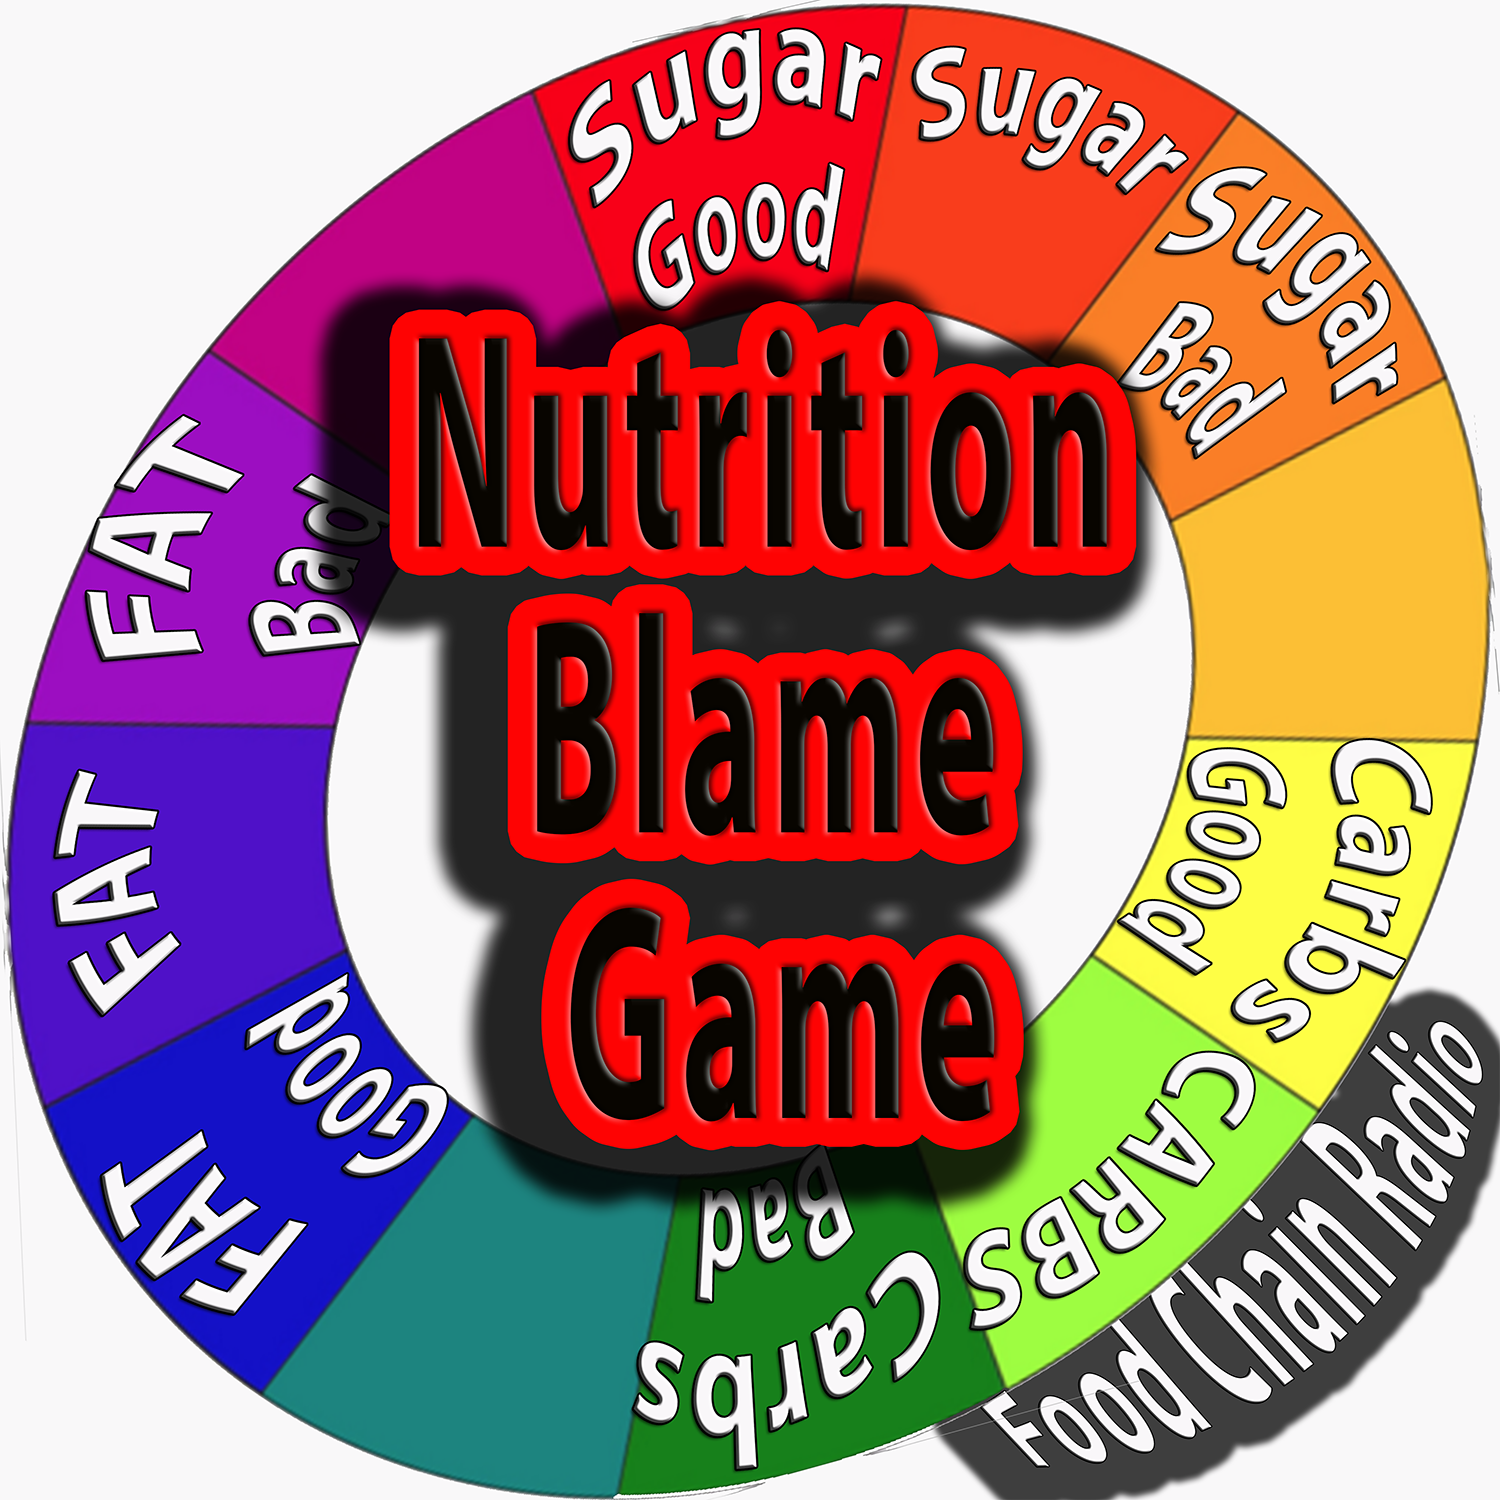 Michael Olson Food Chain Radio: The Nutrition Blame Game